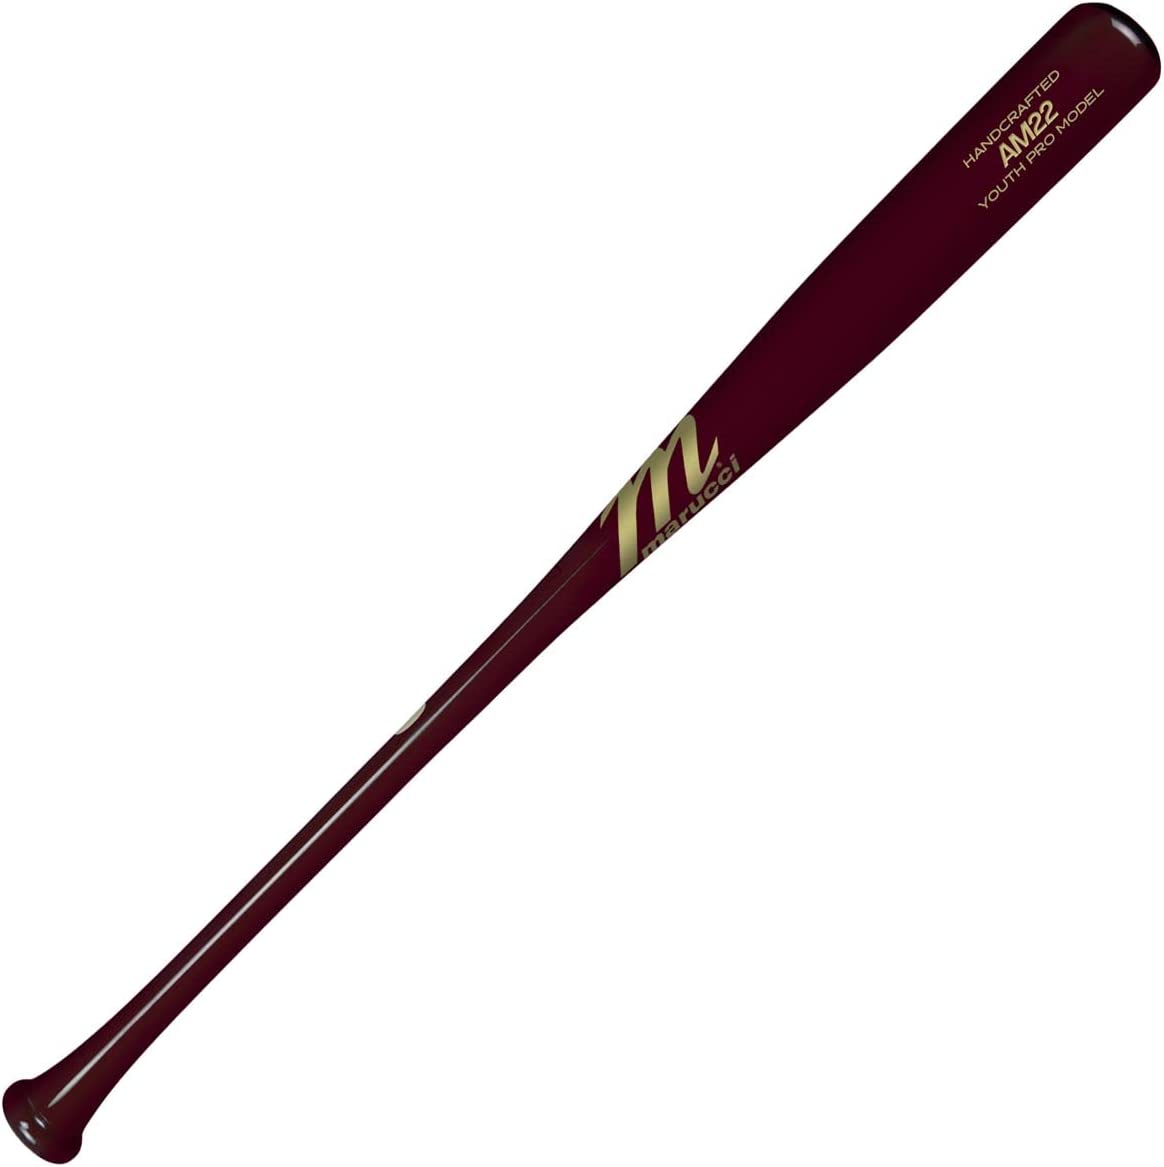 Marucci AM22 Youth Pro Model Maple Wood Baseball Bat